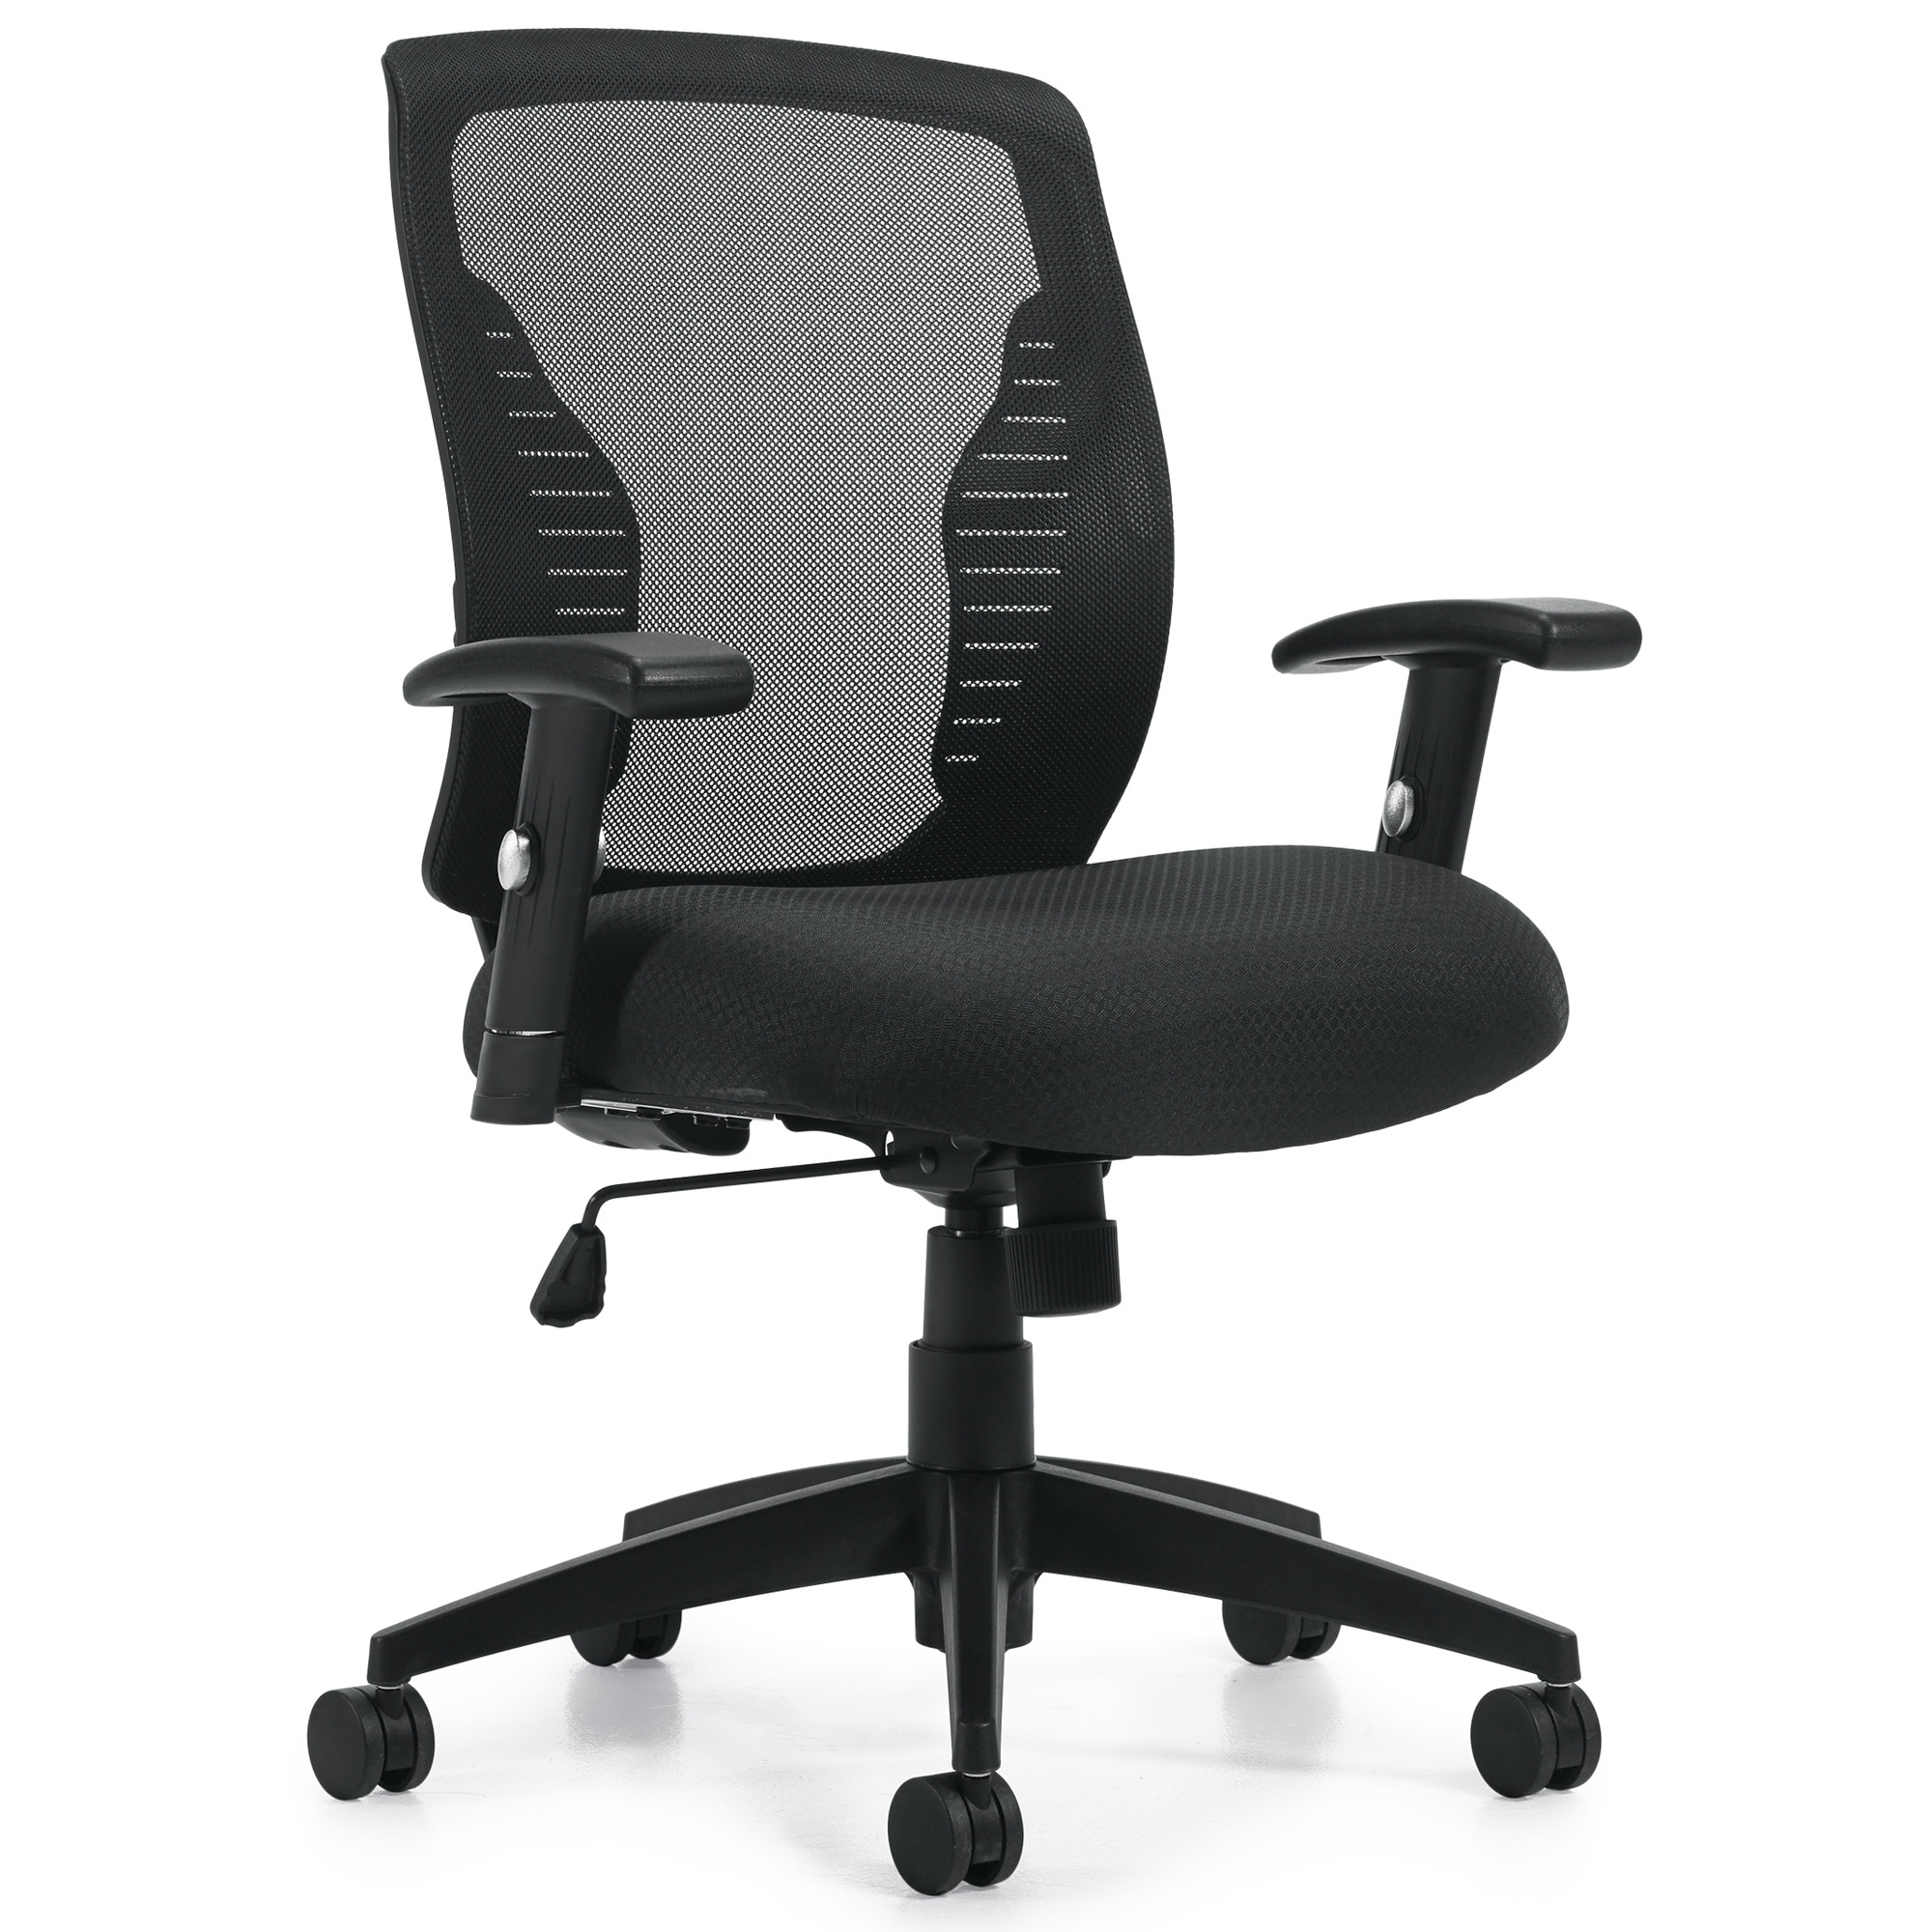 Office desk chairs CUB 11865B QL10 GTO angle